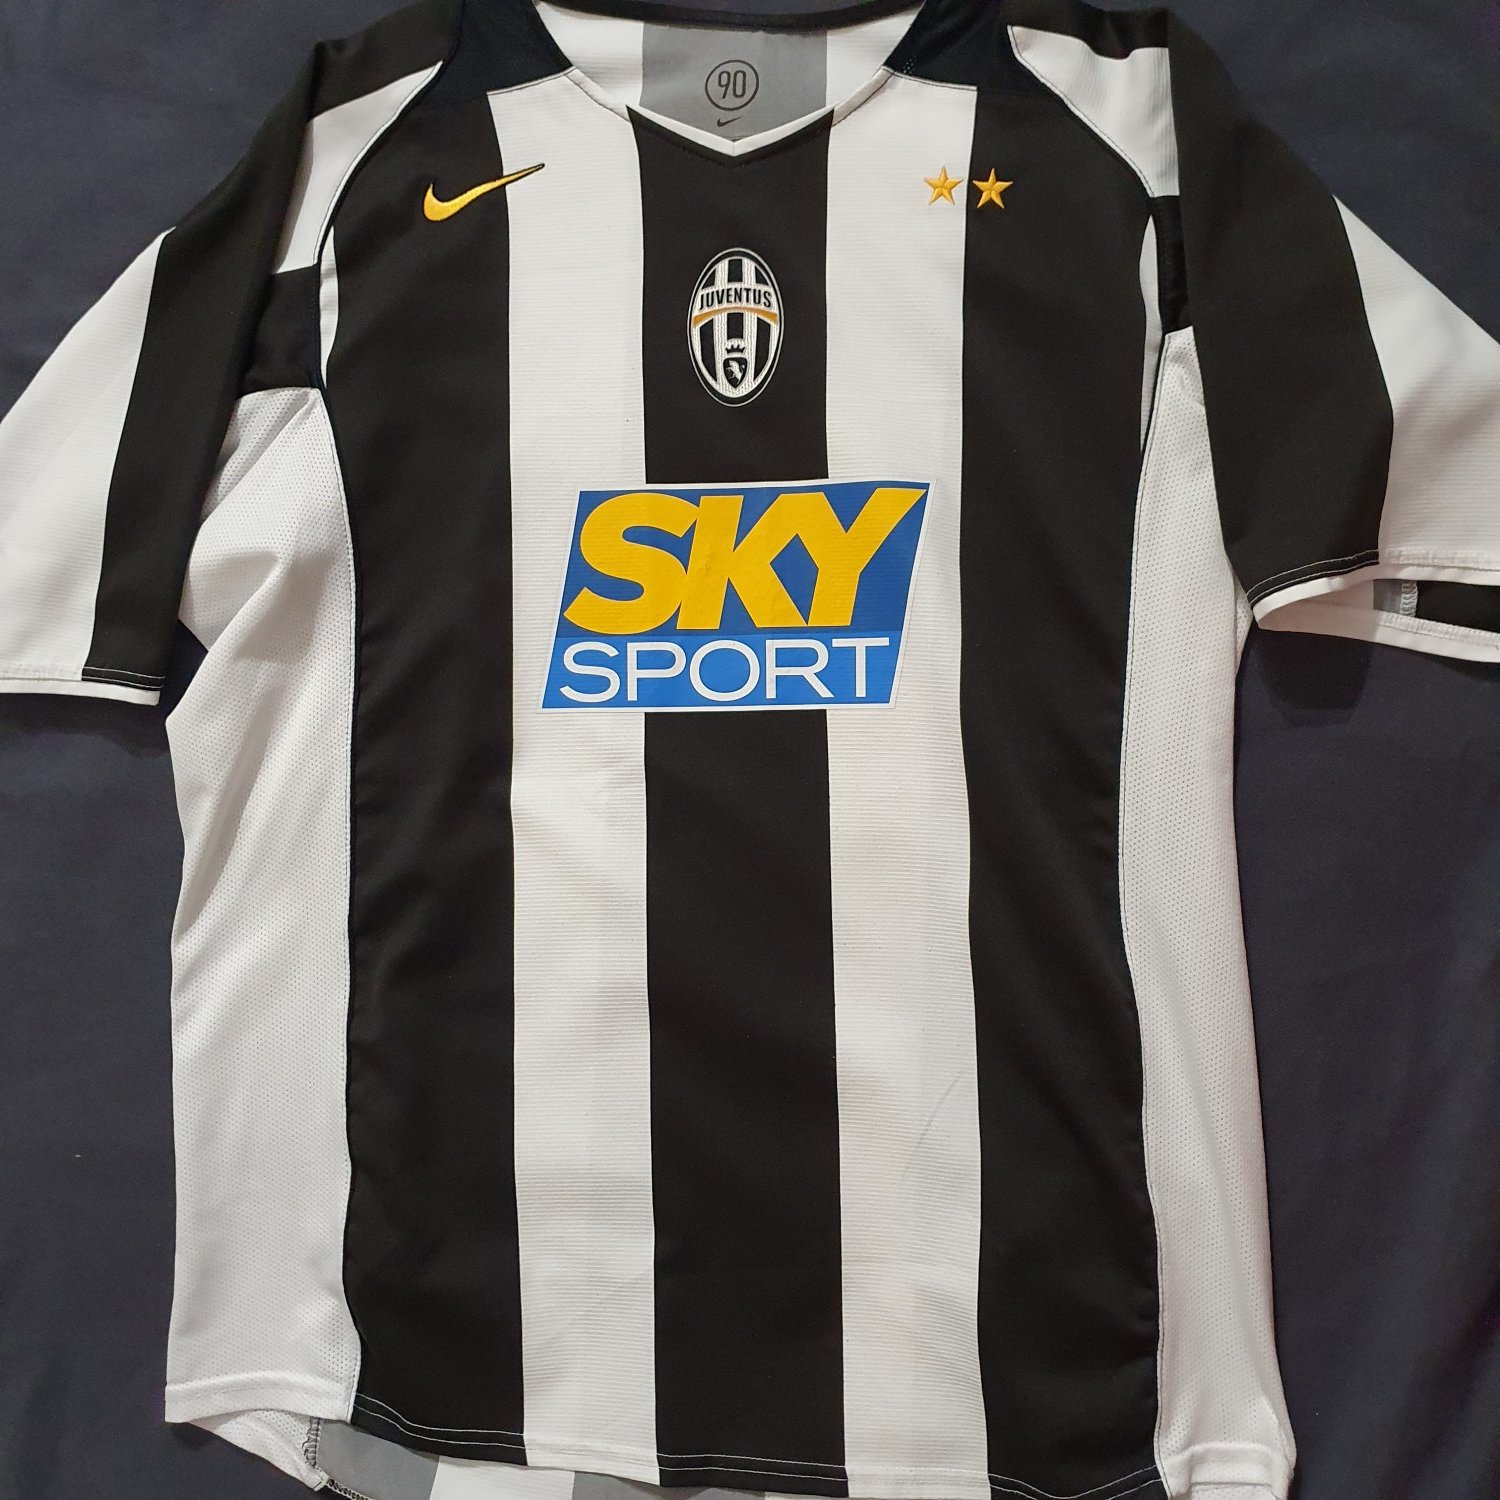 Huiswerk Catastrofe sympathie Juventus Home football shirt 2004 - 2005. Sponsored by Sky Sport